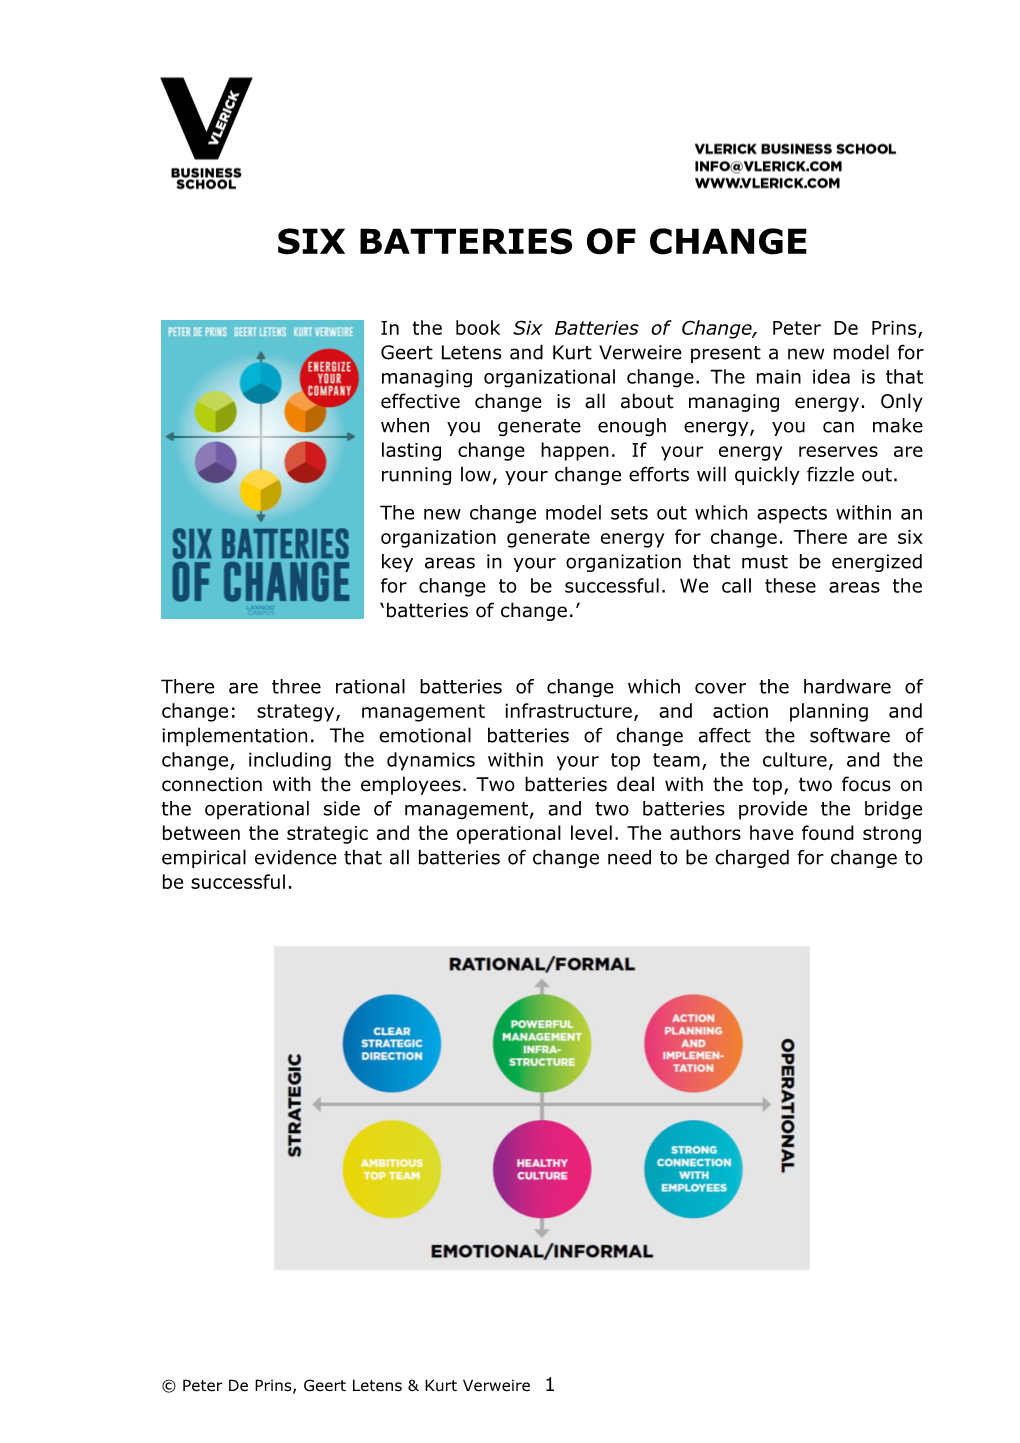 Six Batteries of Change